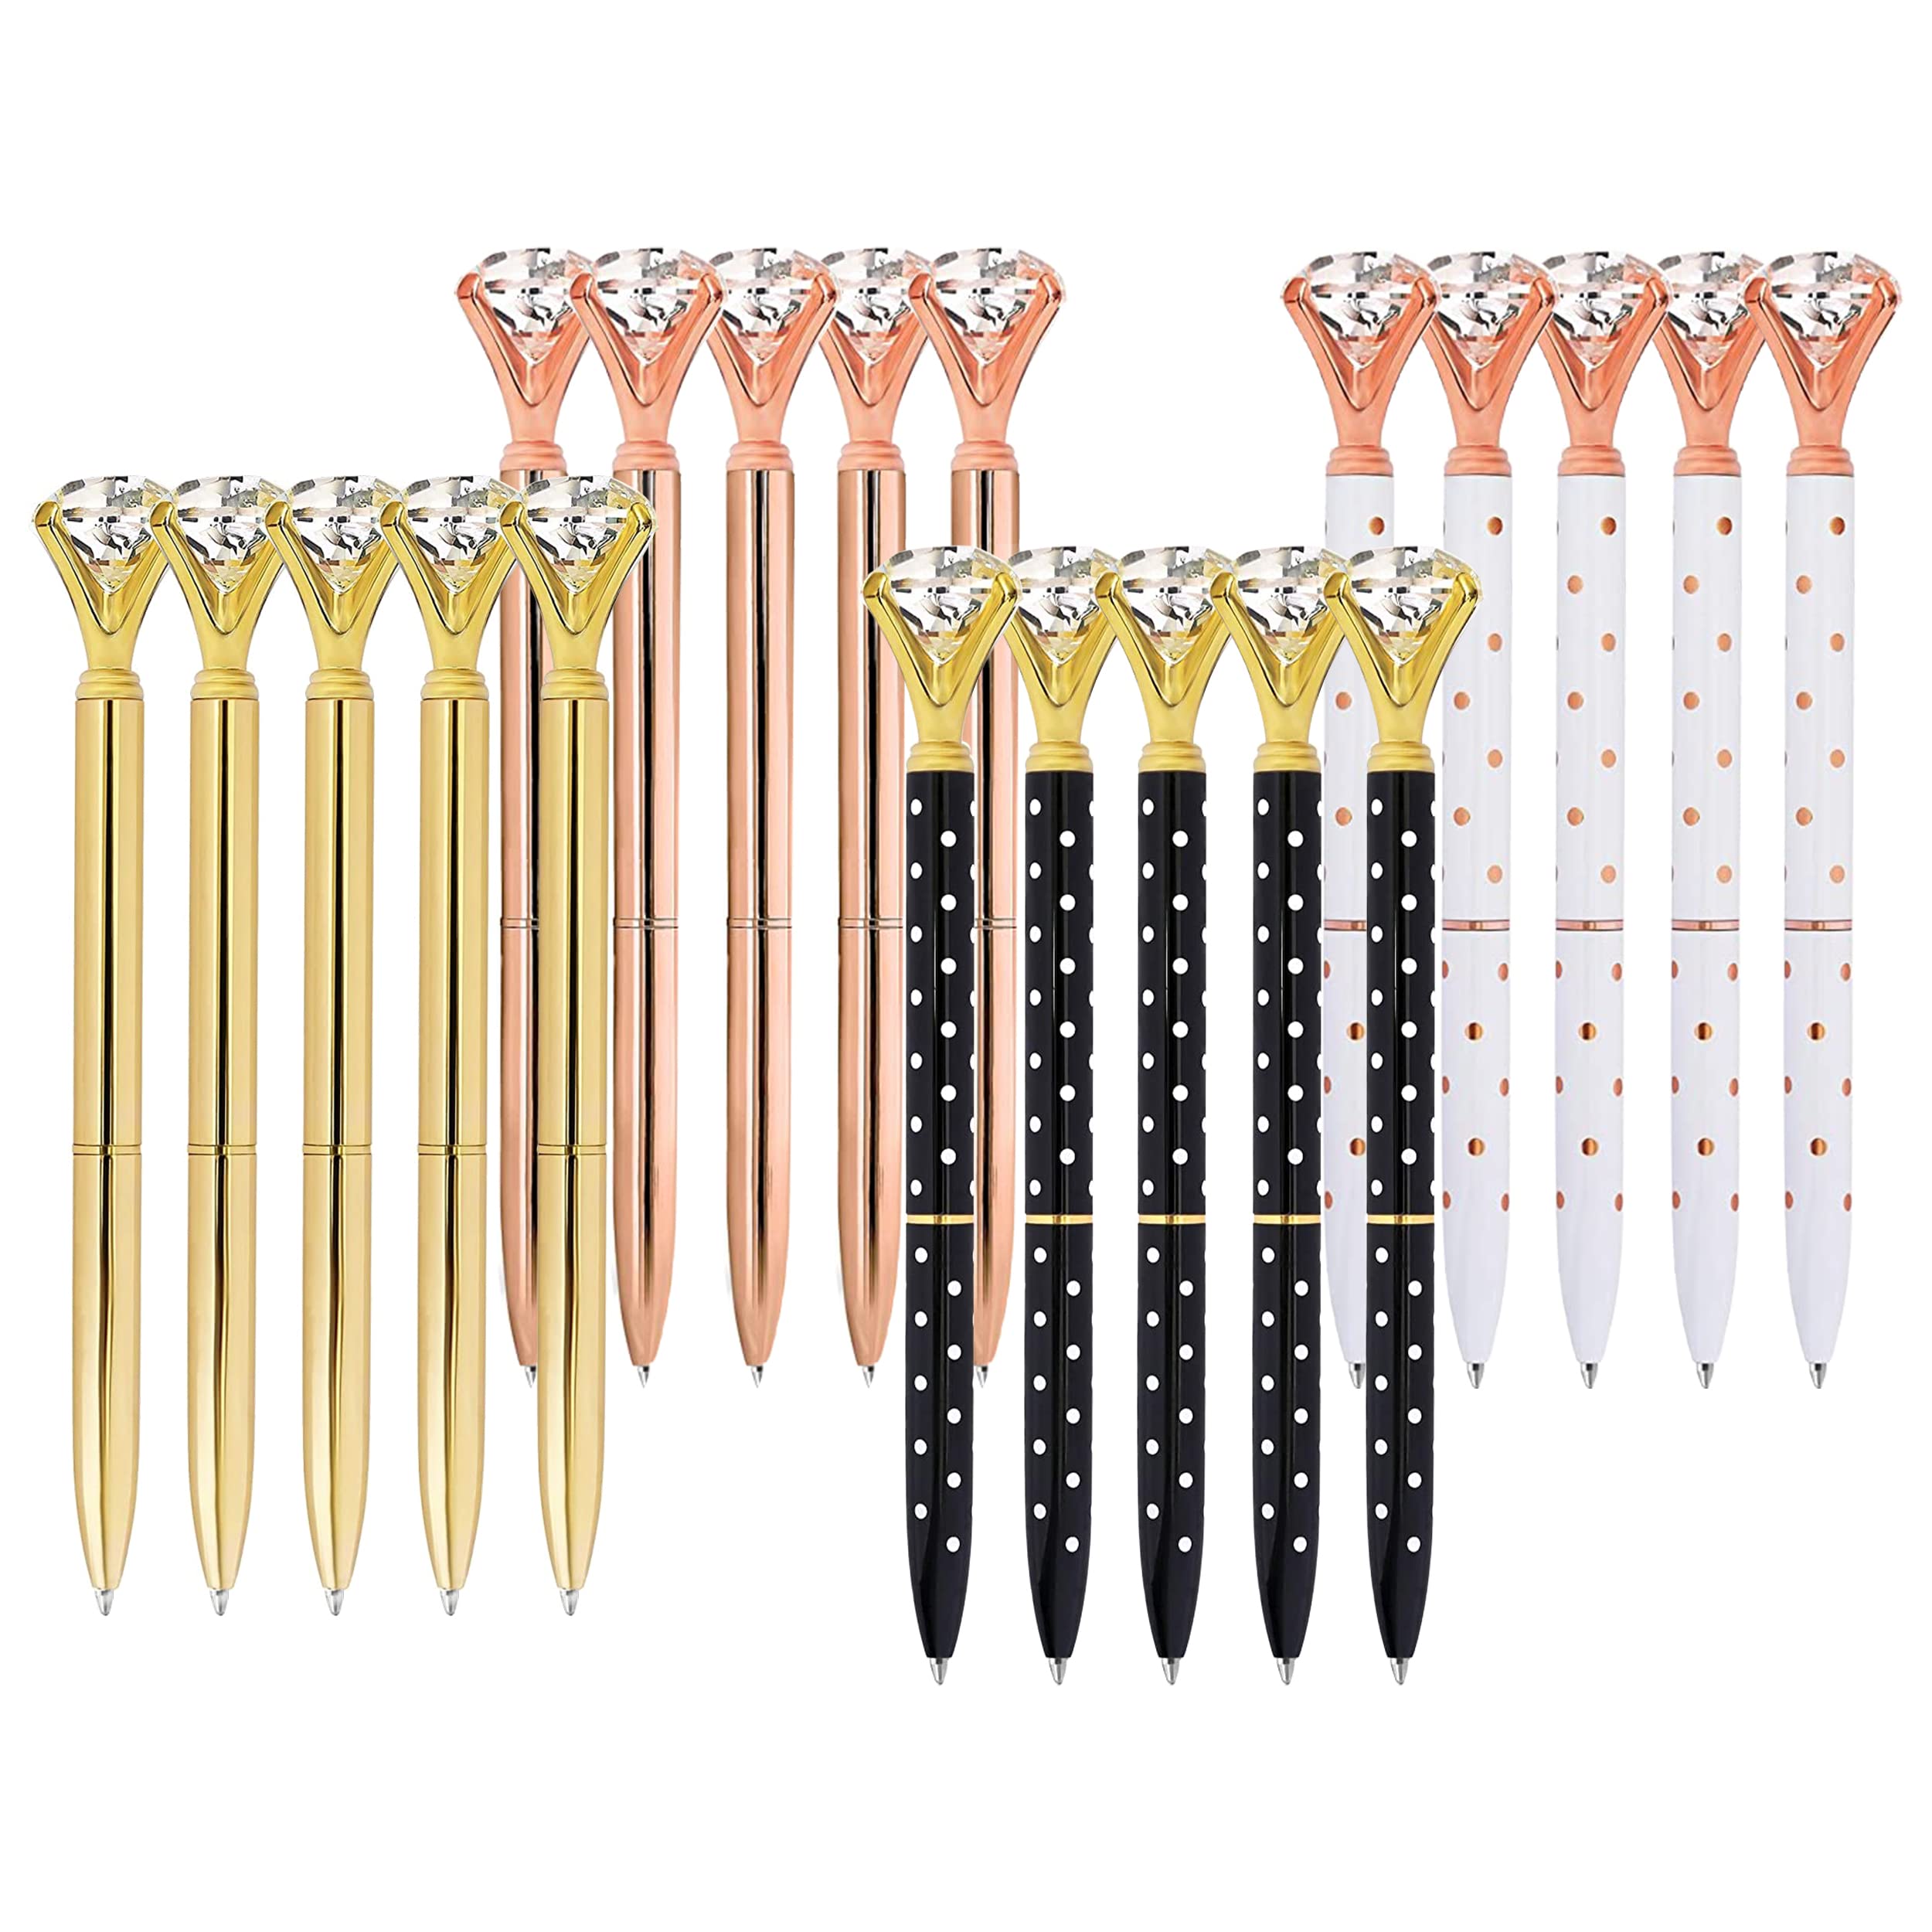 ETCBUYS Multi-Color Diamond Ballpoint Pen for Stylish Fancy Office Supplies- Pens-RGBWG-12PK